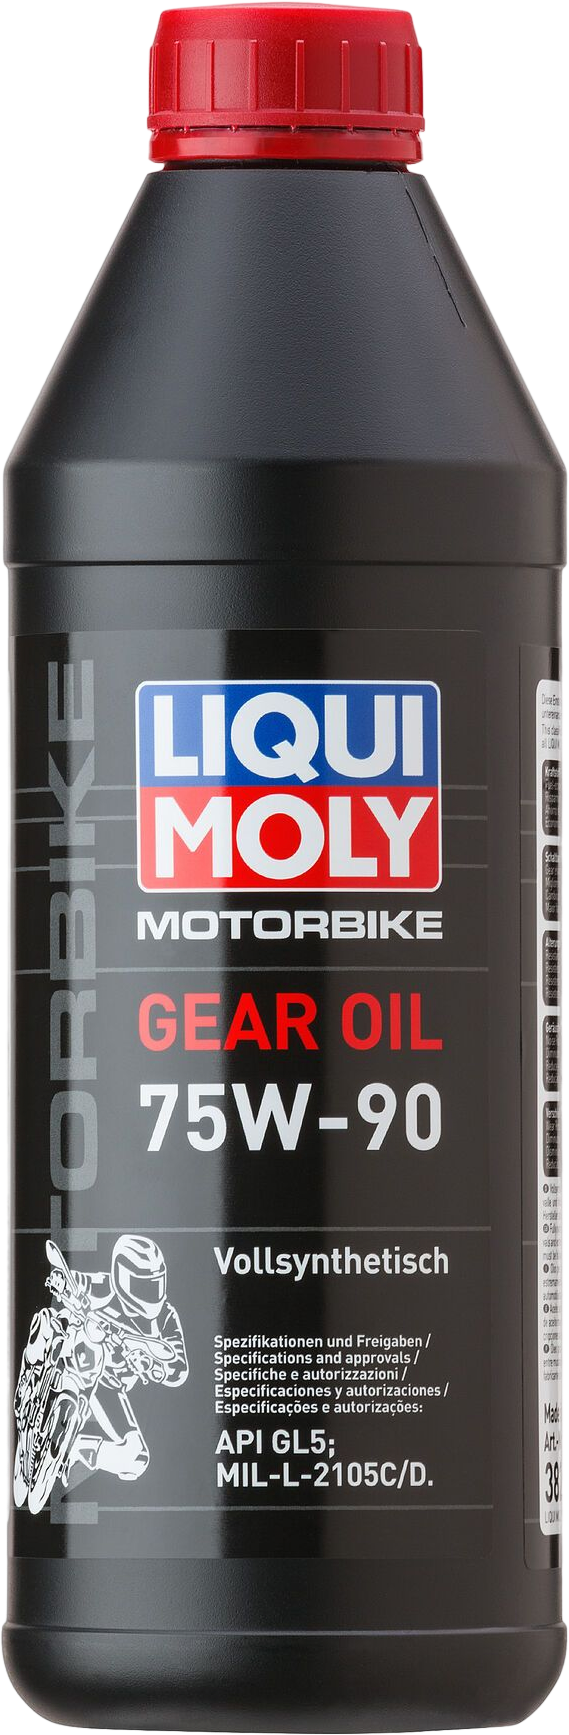 Liqui Moly Motorbike Transmissieolie 75W-90, 6 x 1 lt detail 2